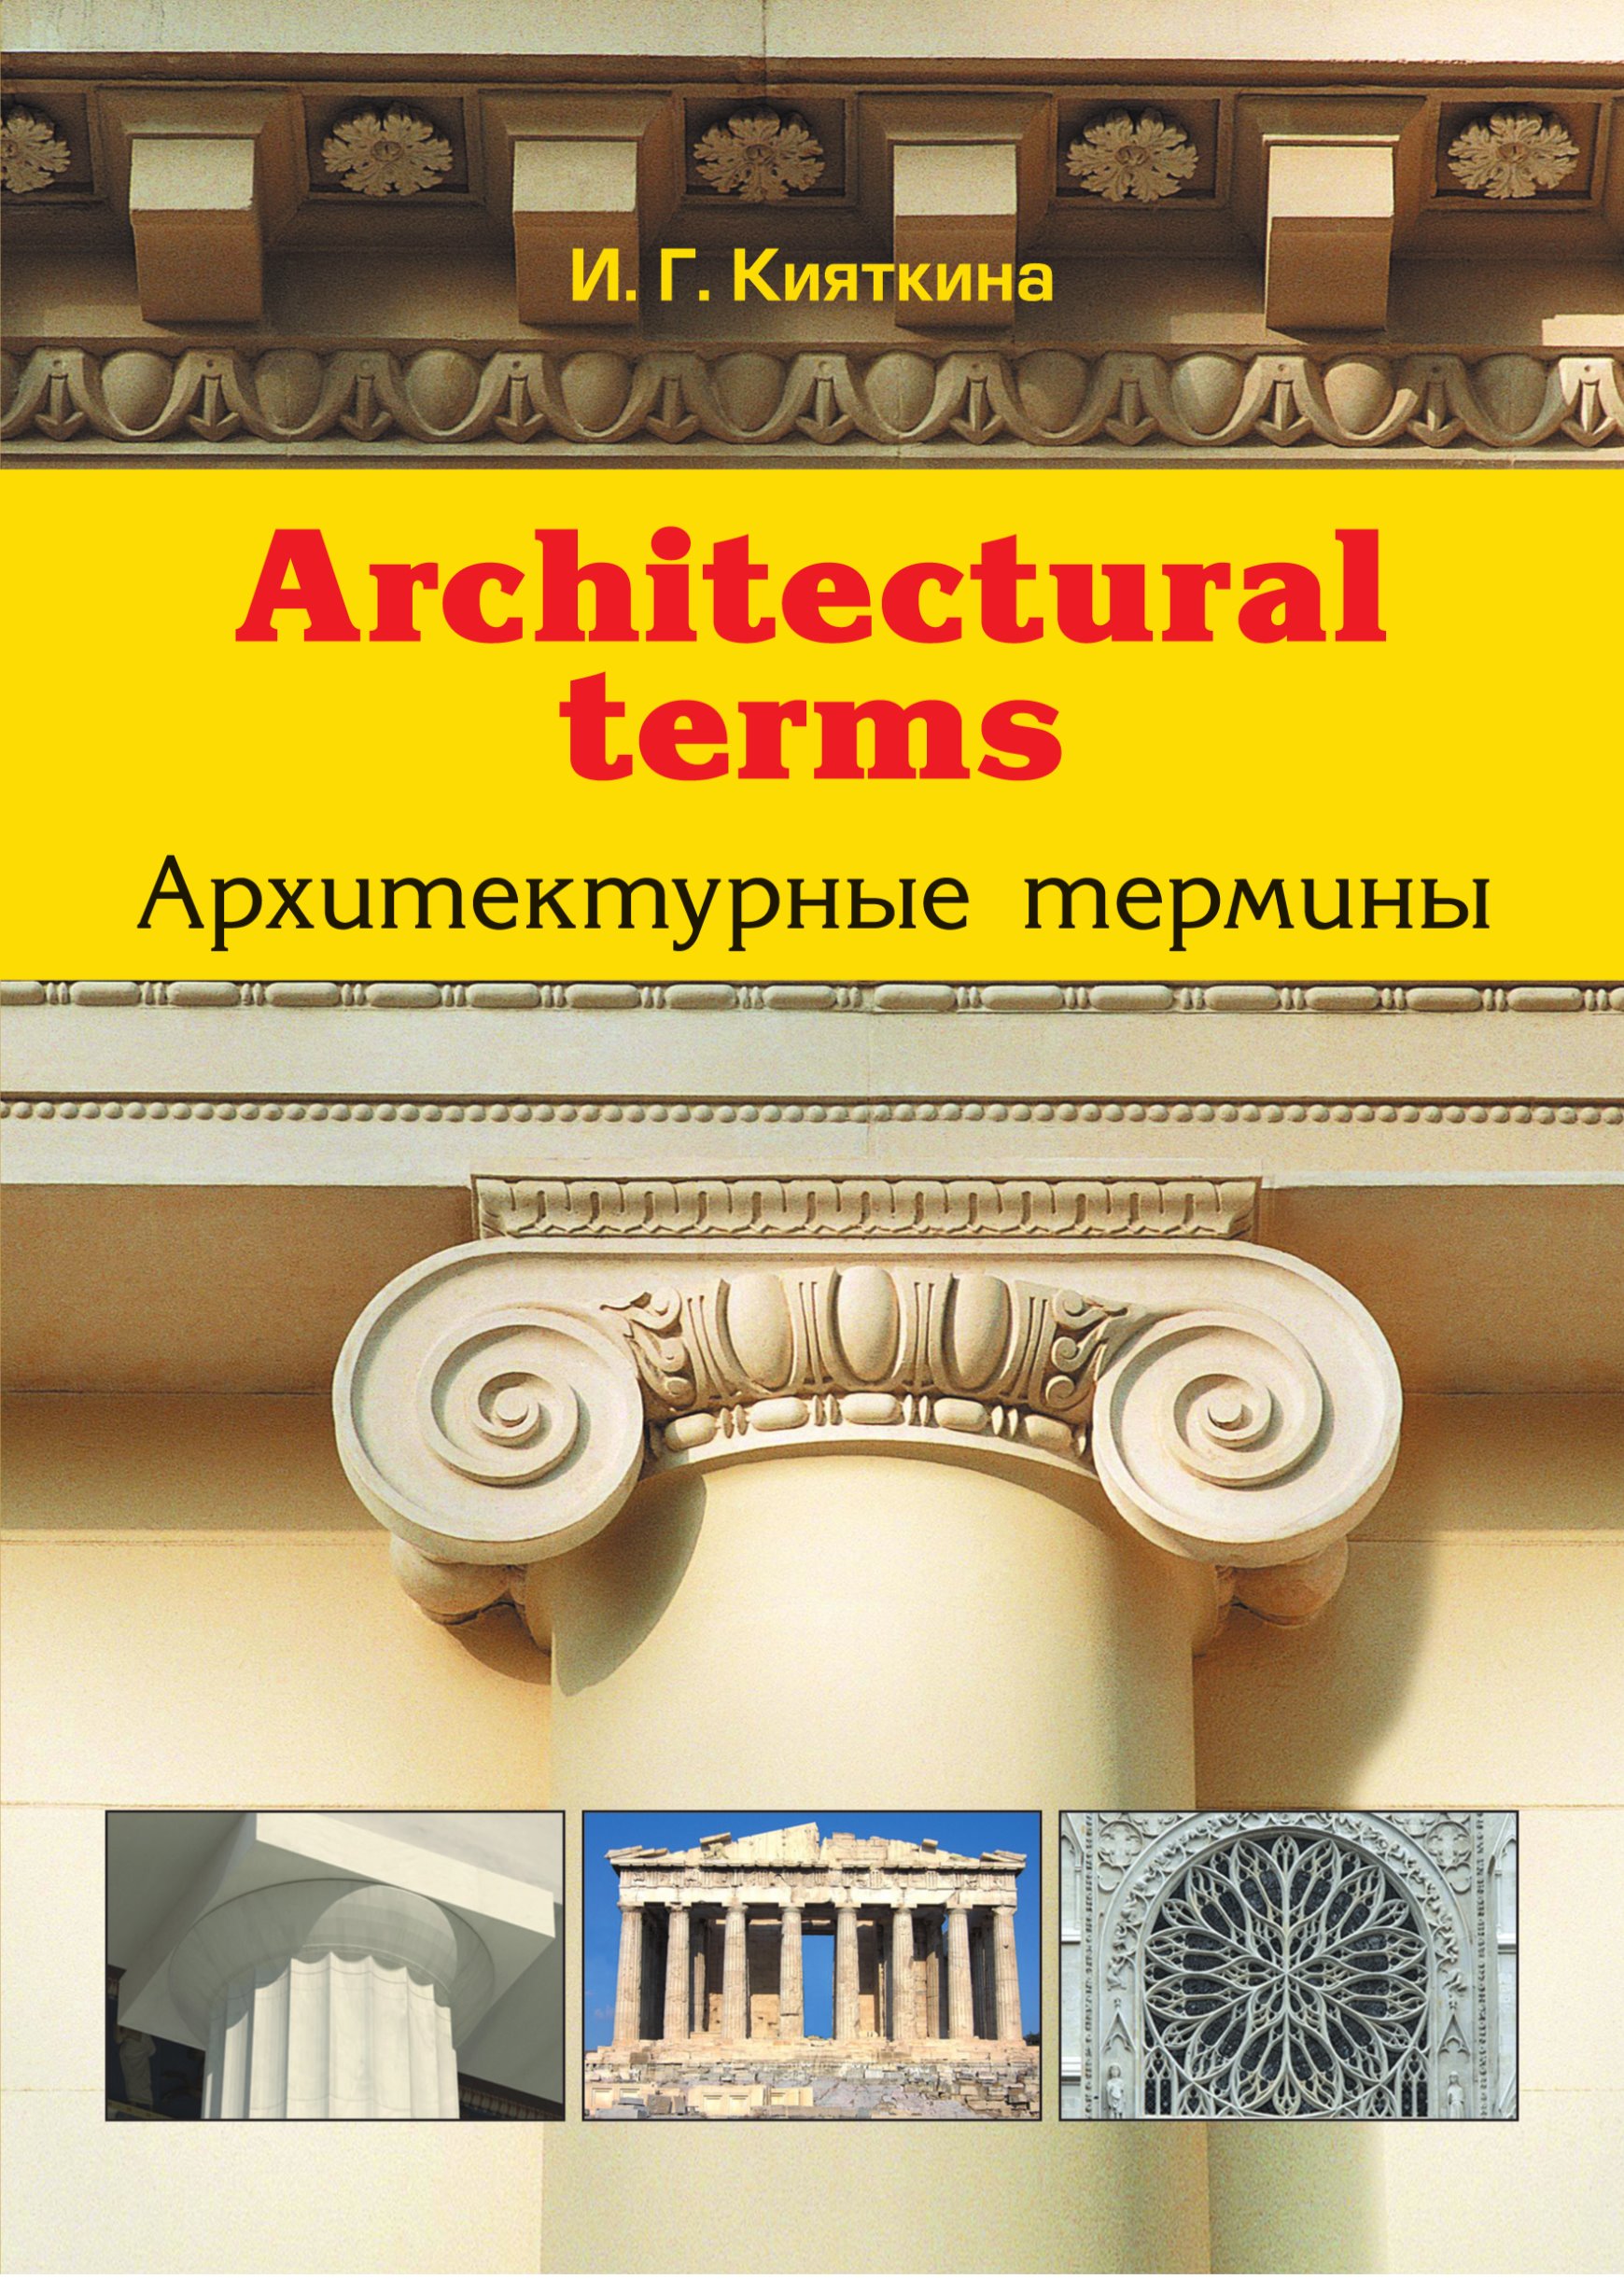 Architectural terms.Архитектурные термины